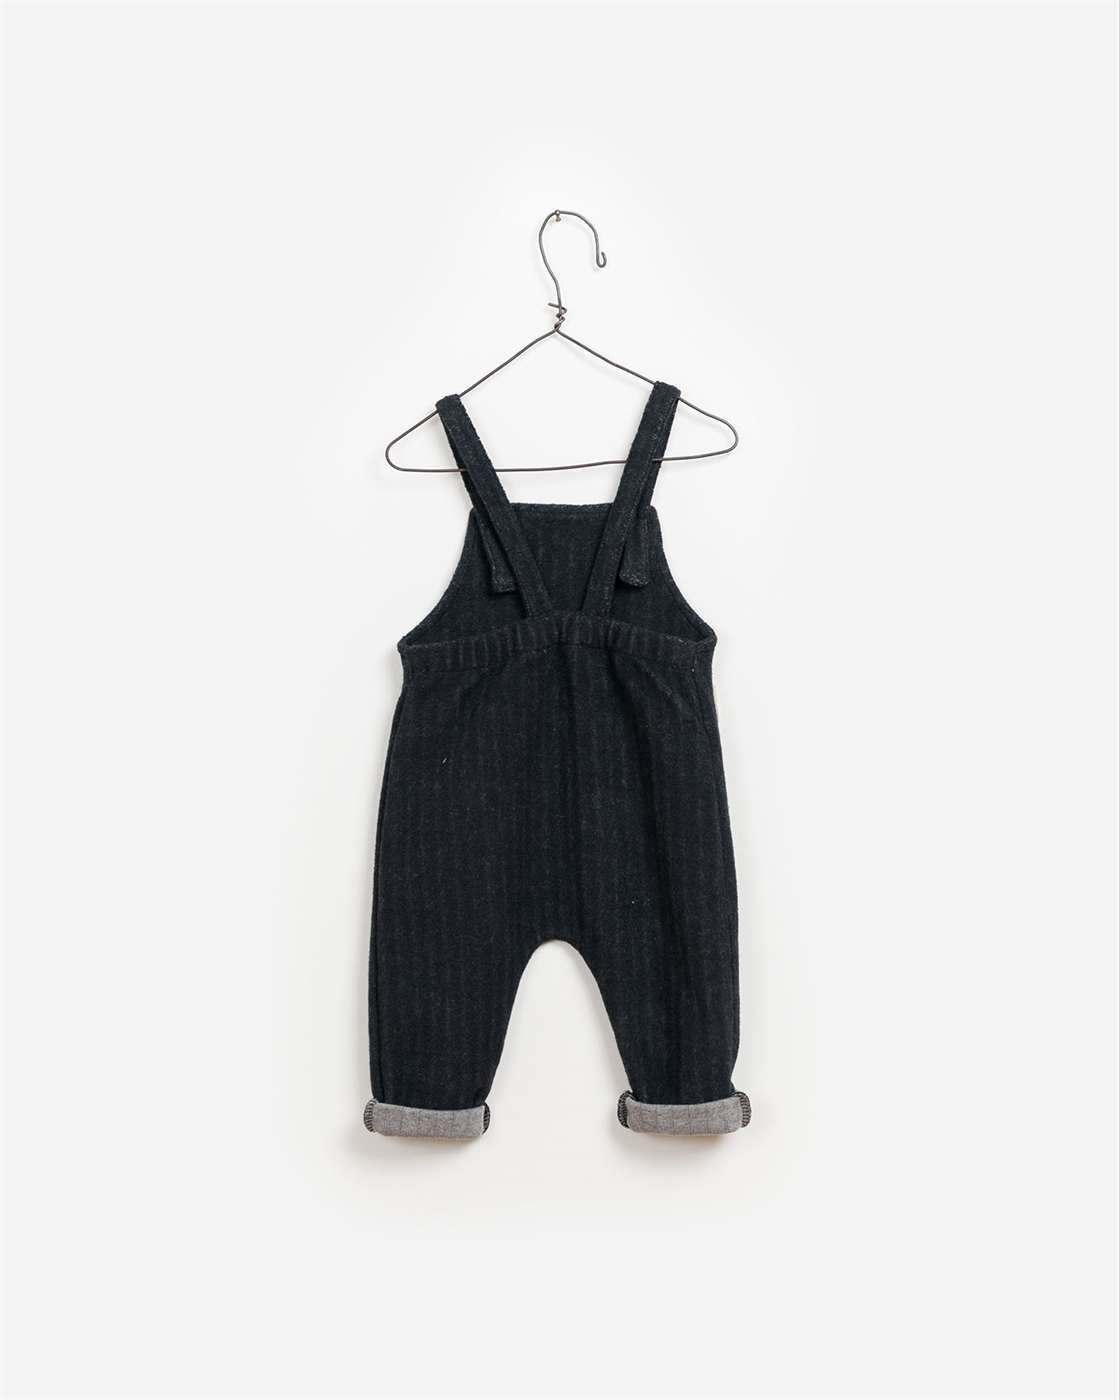 BeeBoo|BeeBoo PlayUp vêtements bébé baby clothes salopette overall Felpa coton bio organic cotton noire black 1